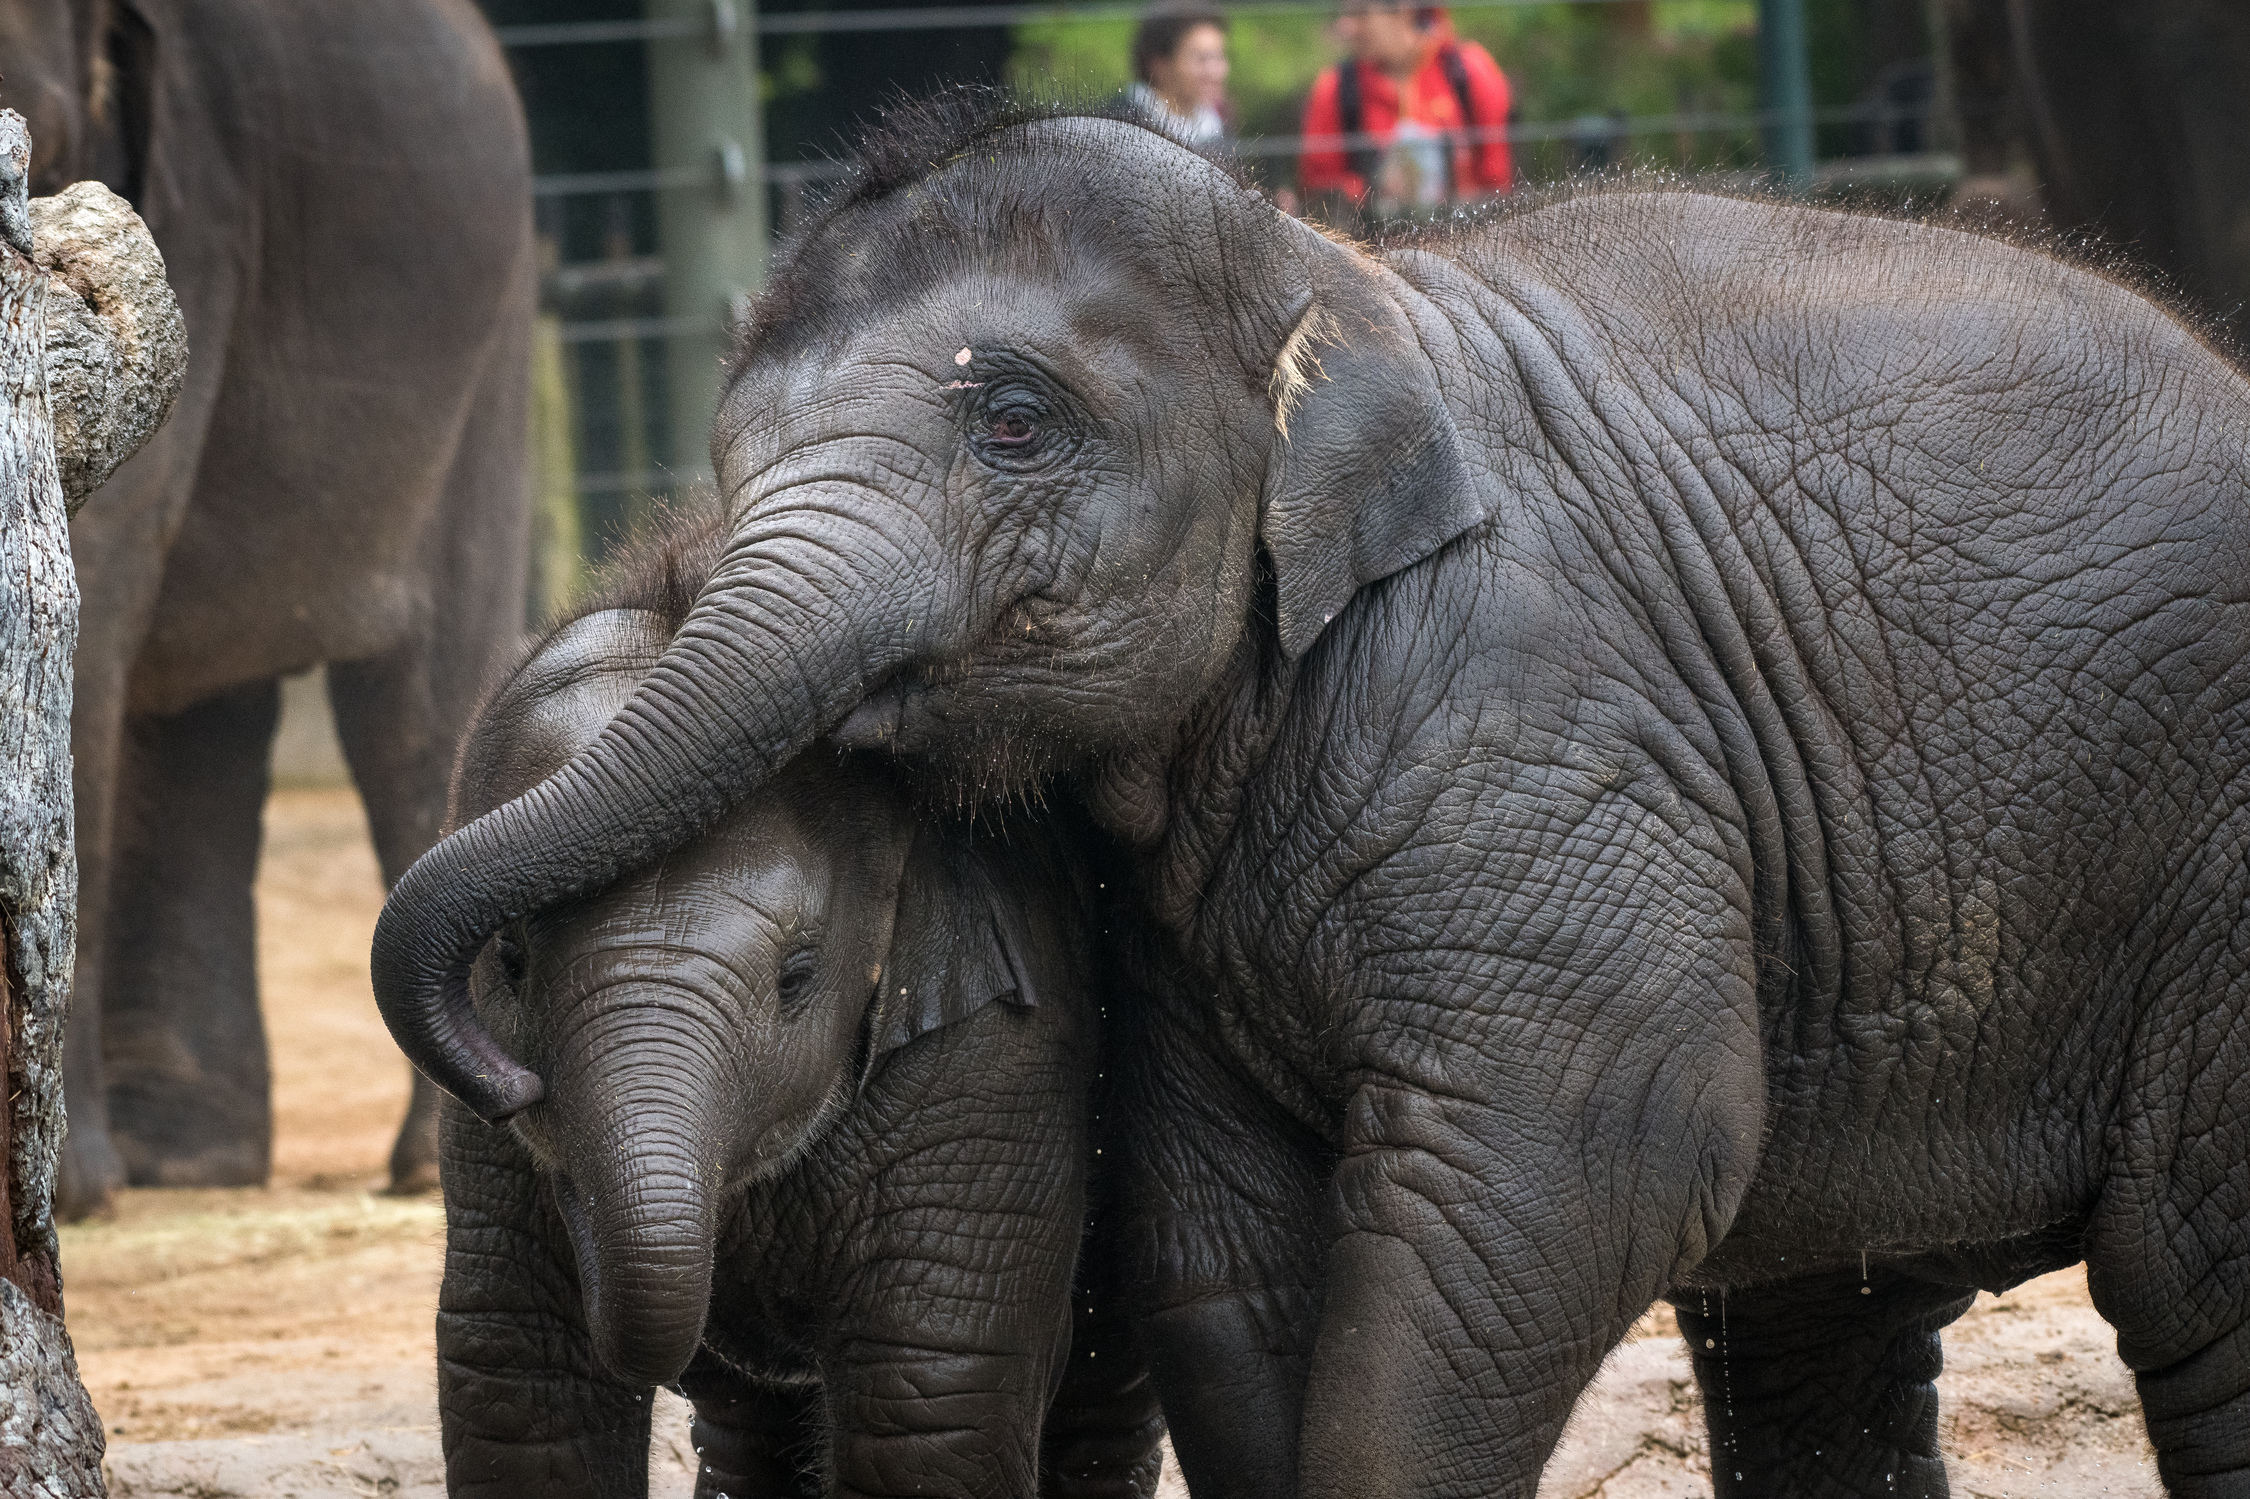 Life-saving Protocols Activated to Save Baby Elephant - The Houston Zoo